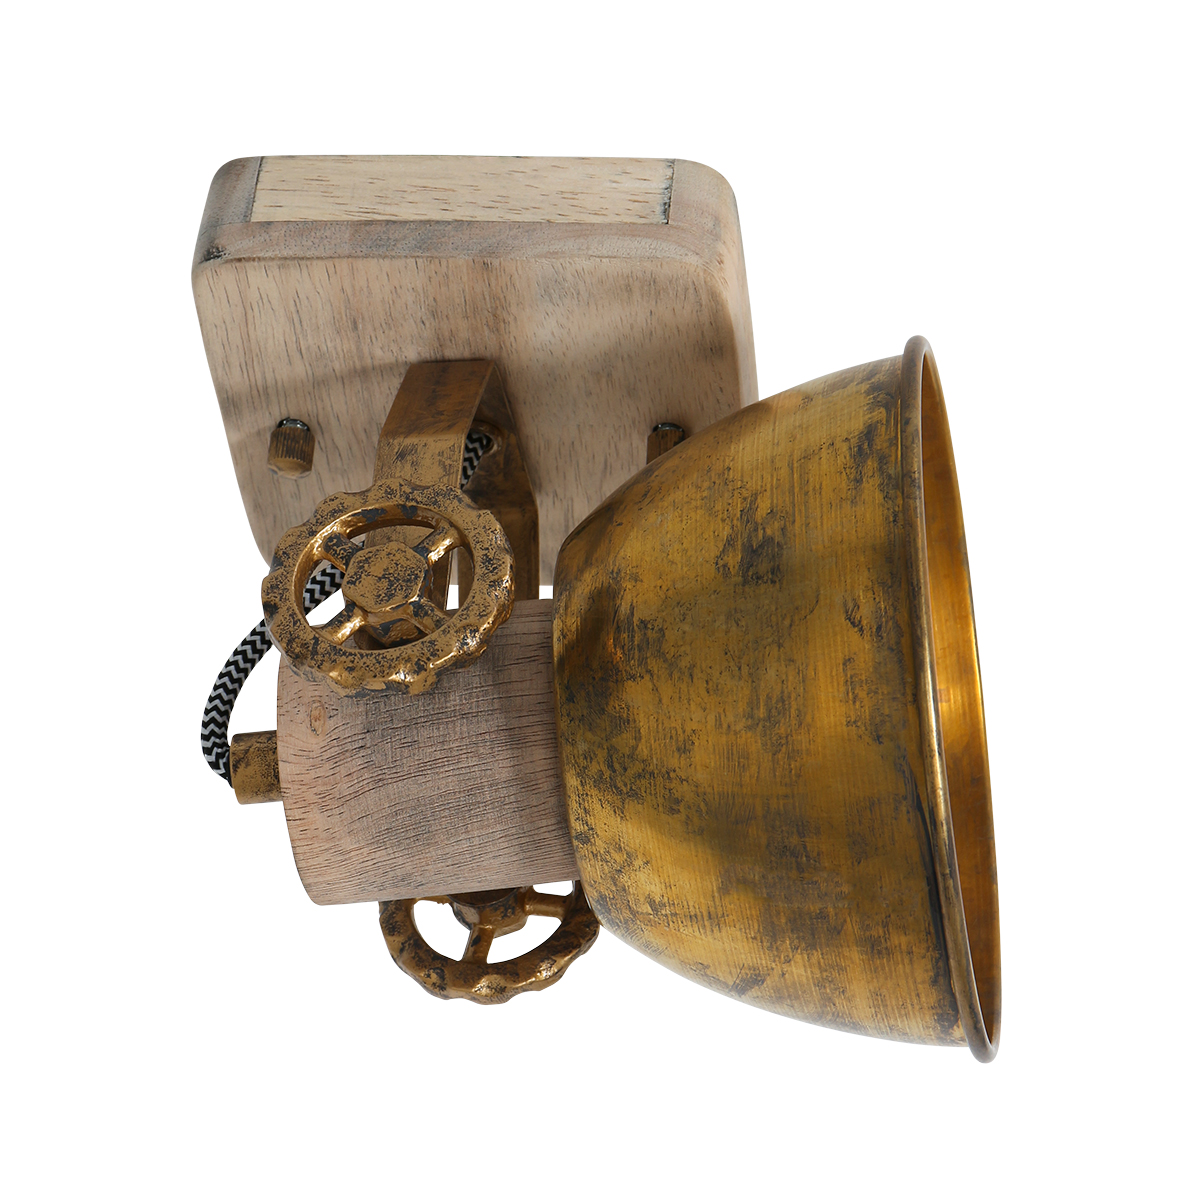 met vintage Gearwood | Industriele lampen online